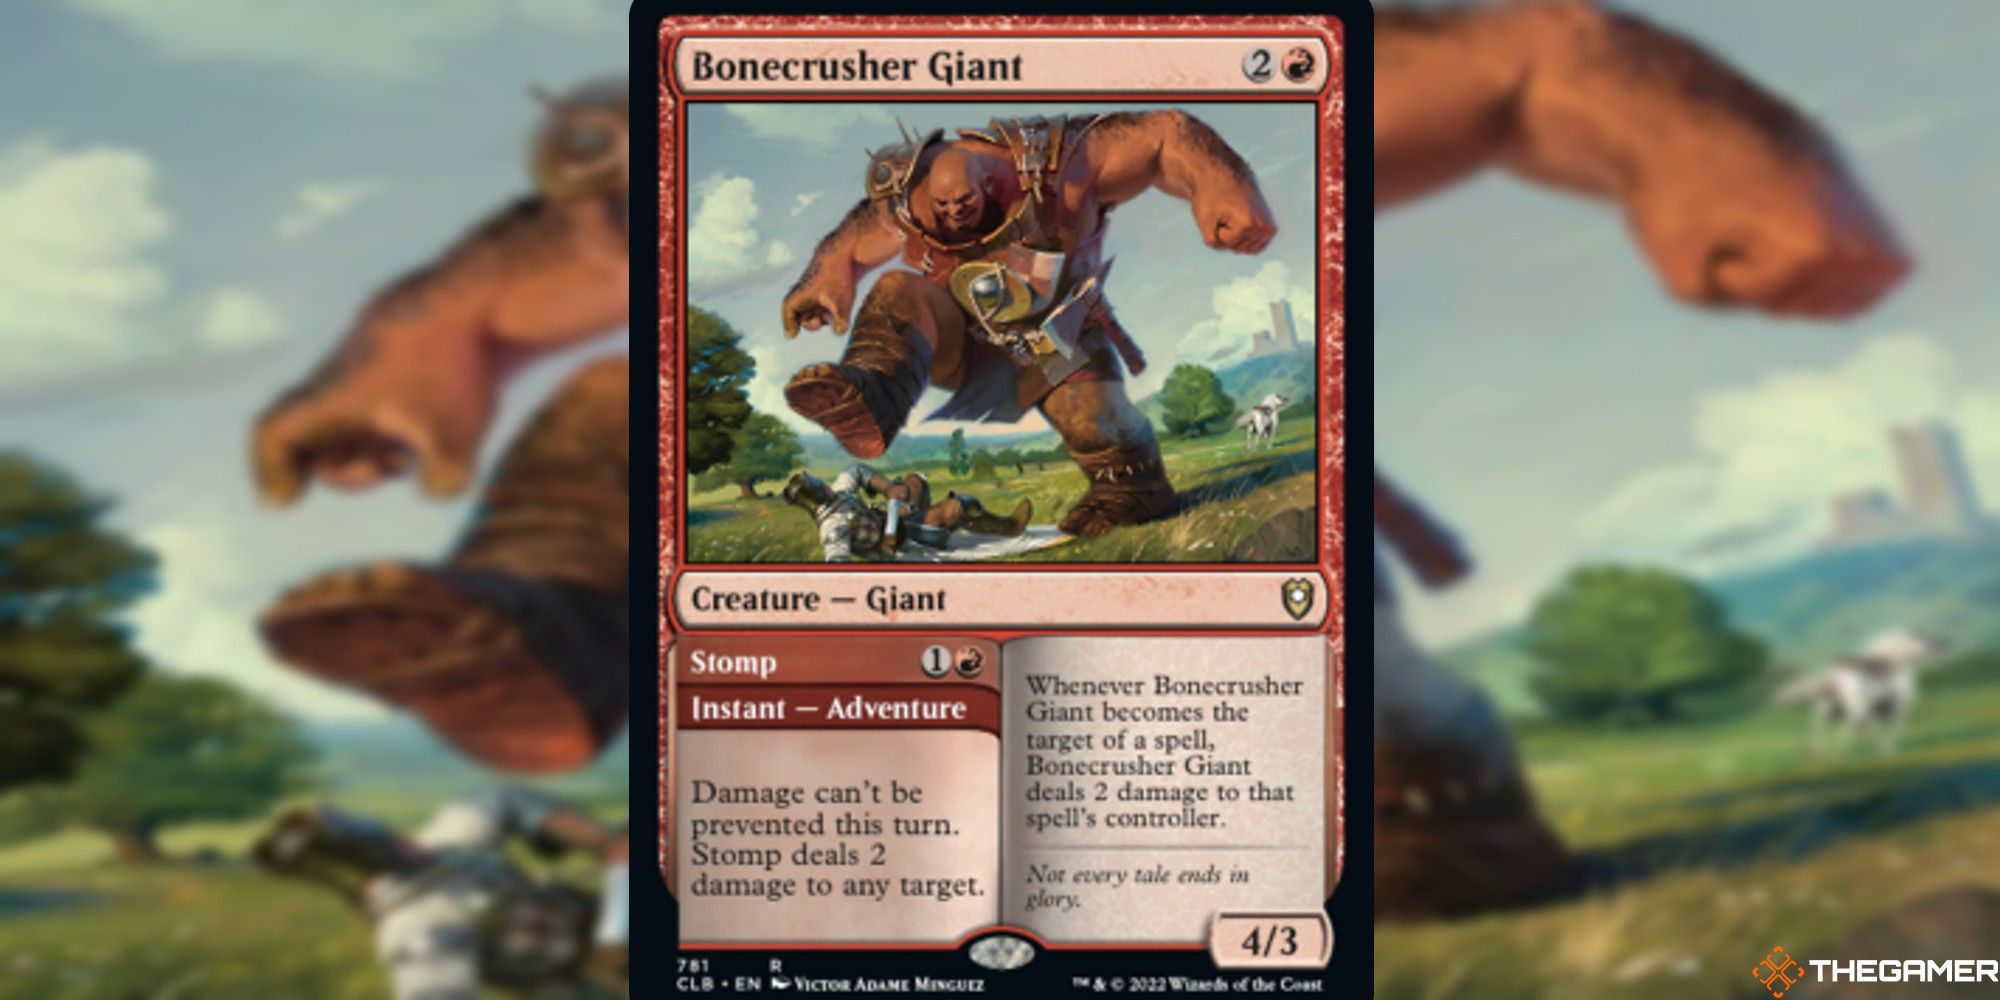 mtg bonecrusher giant full card with art background